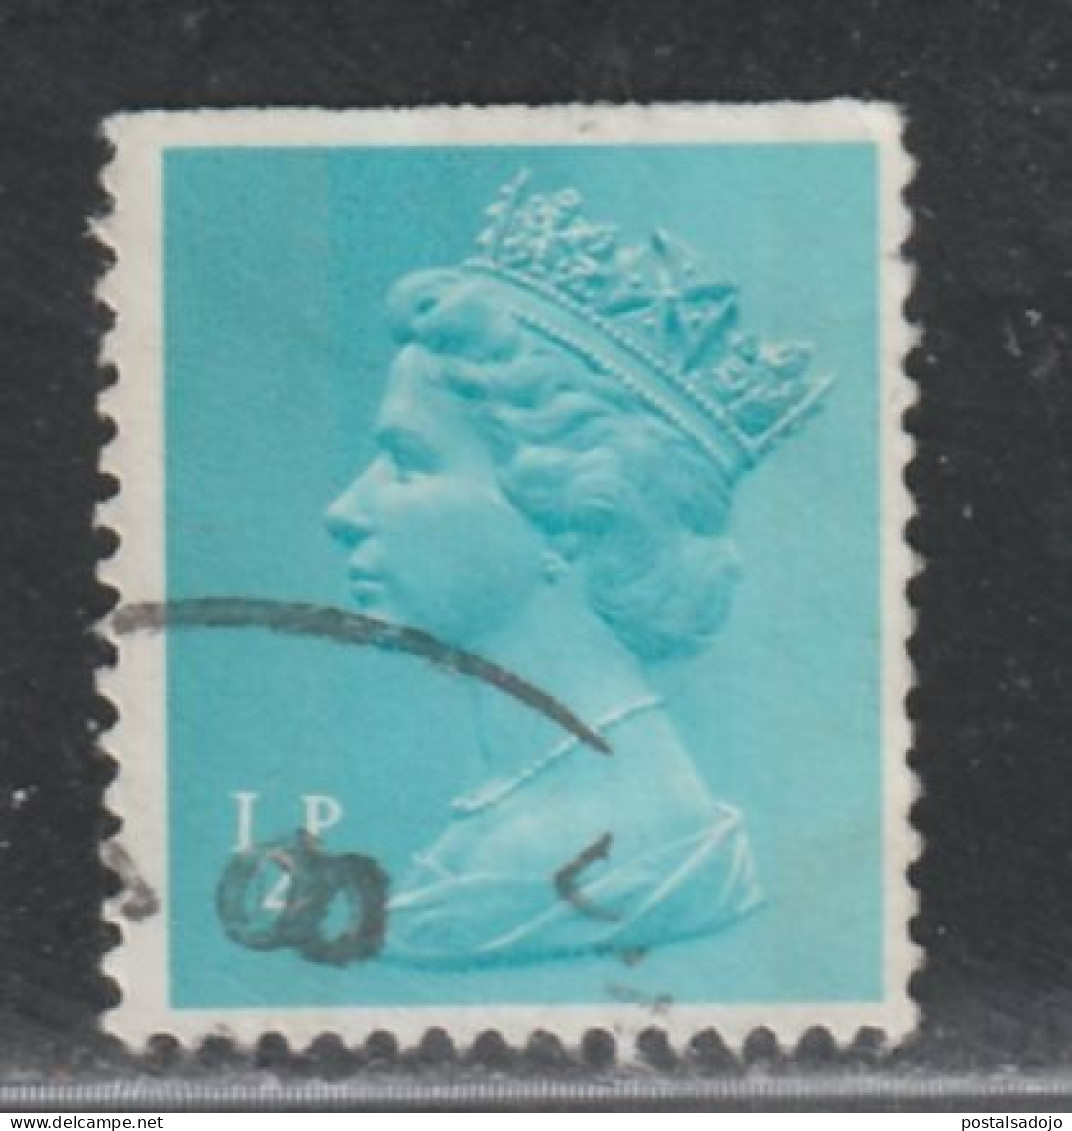 4GRANDE-BRETAGNE 023 // YVERT 605  // 1970-80 - Used Stamps